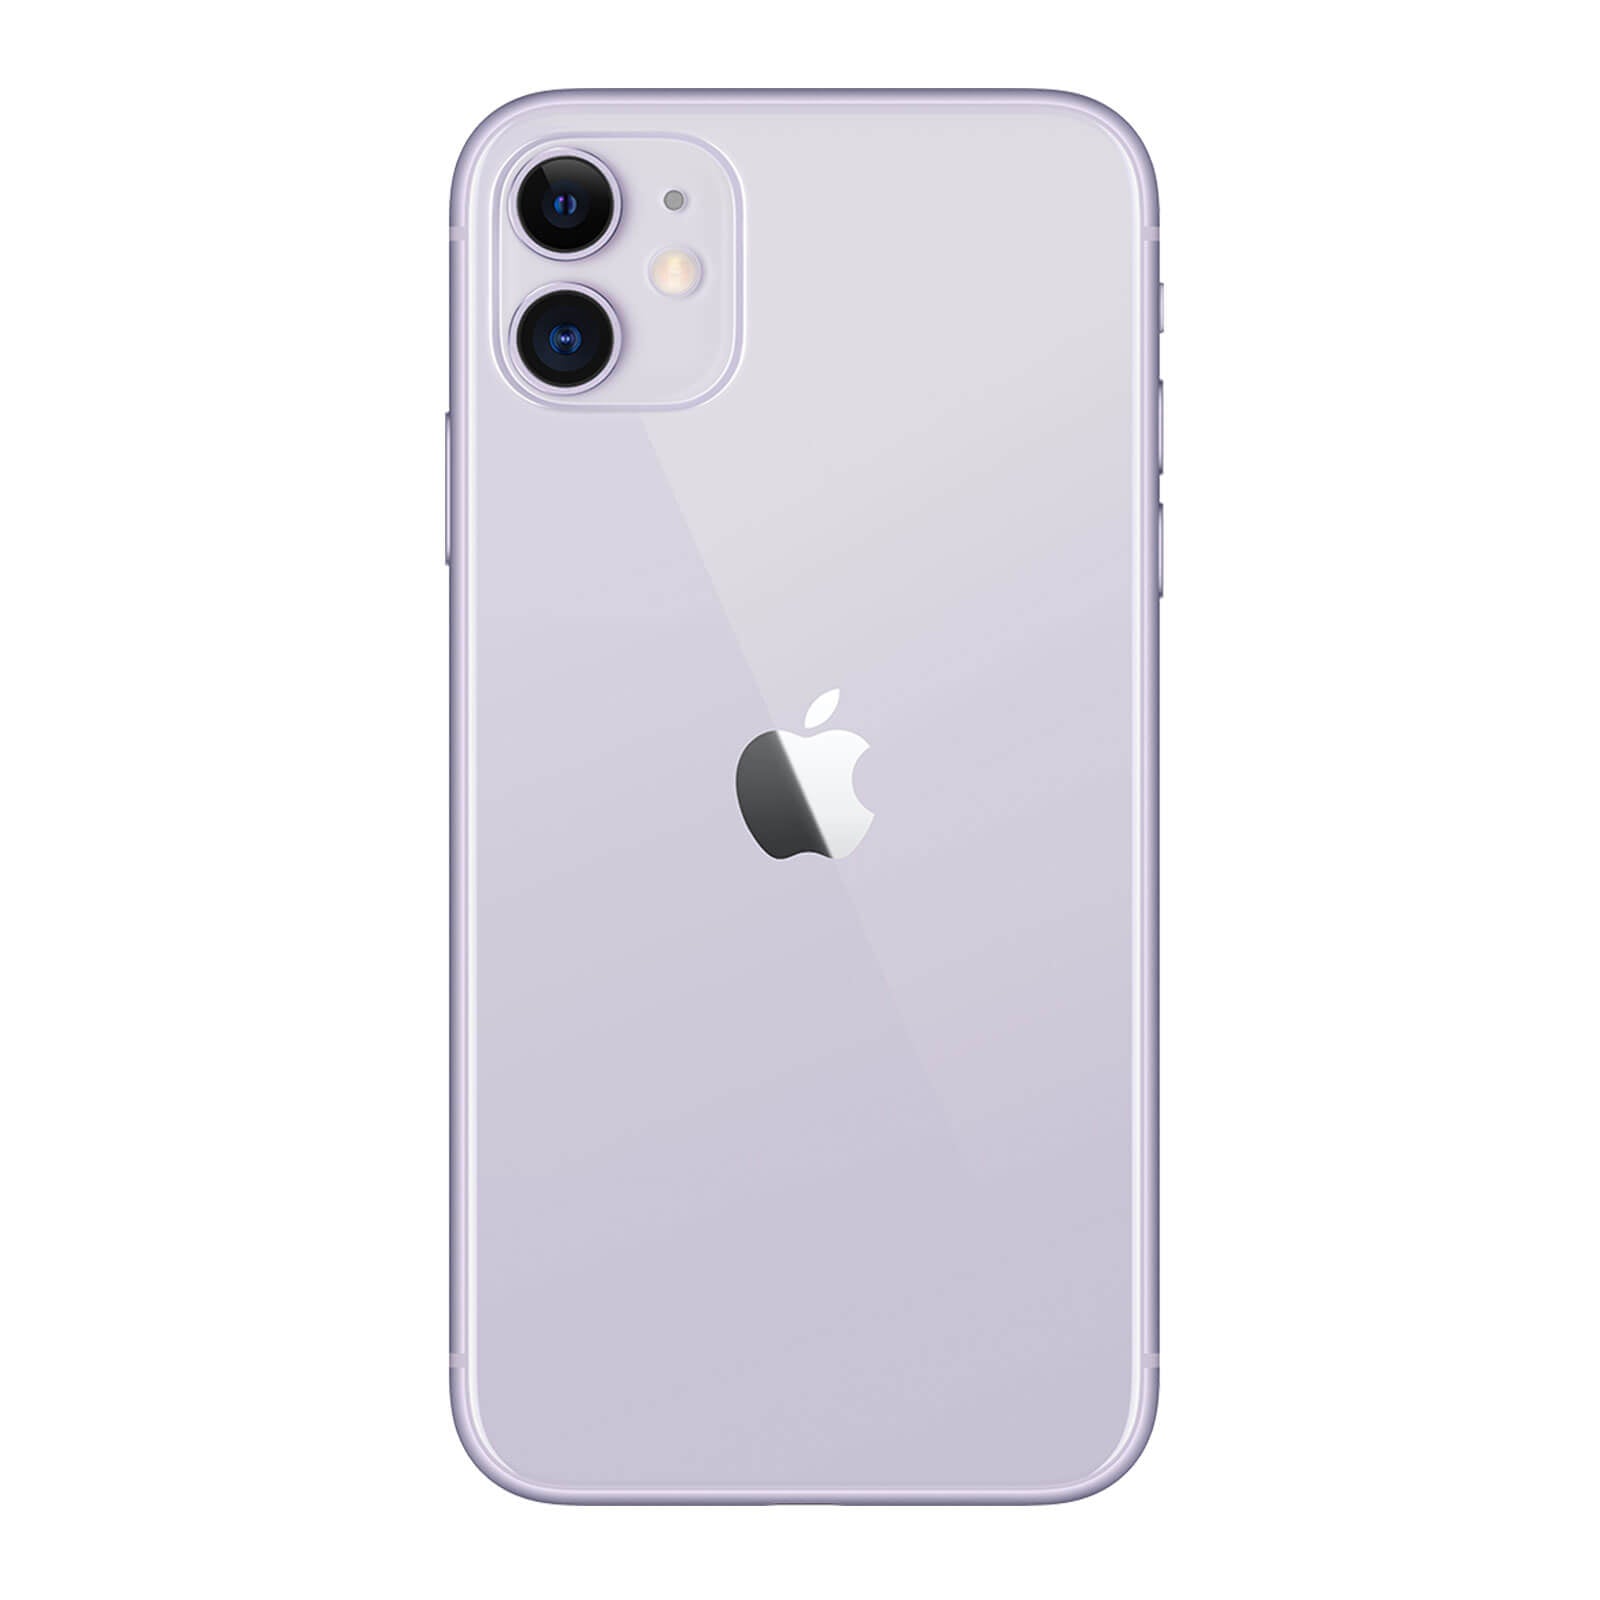 Apple iPhone 11 64GB Purple Fair - Verizon